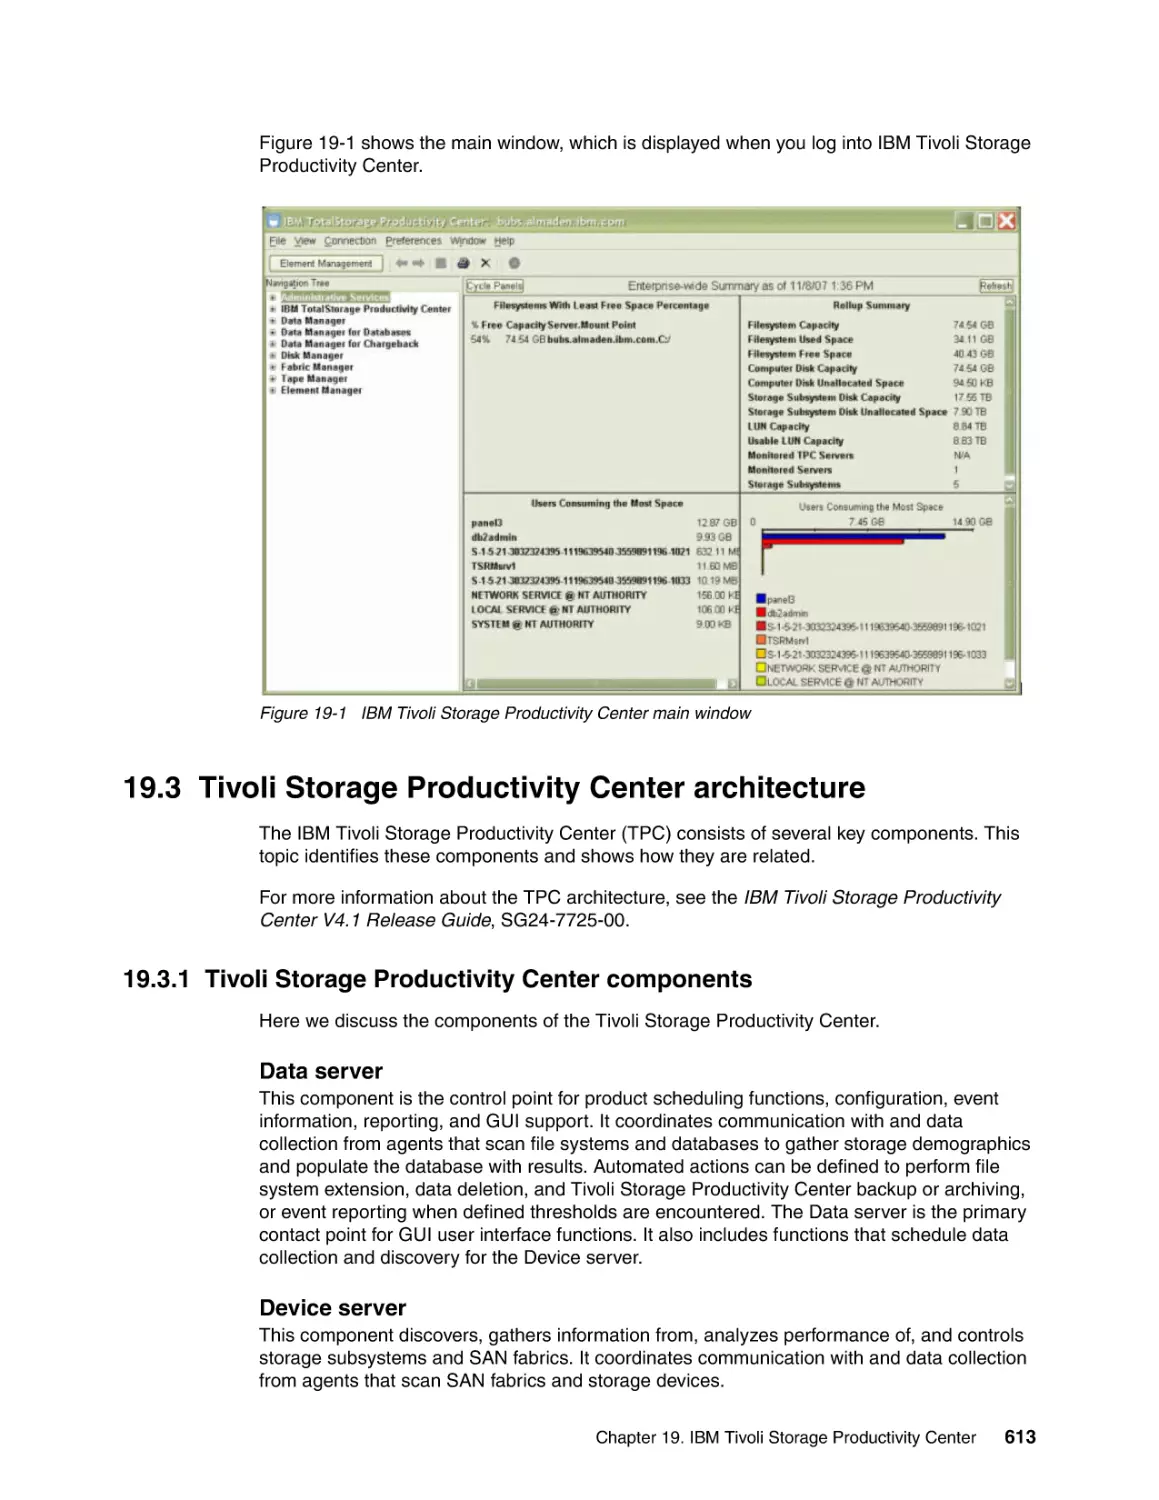 19.3 Tivoli Storage Productivity Center architecture
19.3.1 Tivoli Storage Productivity Center components